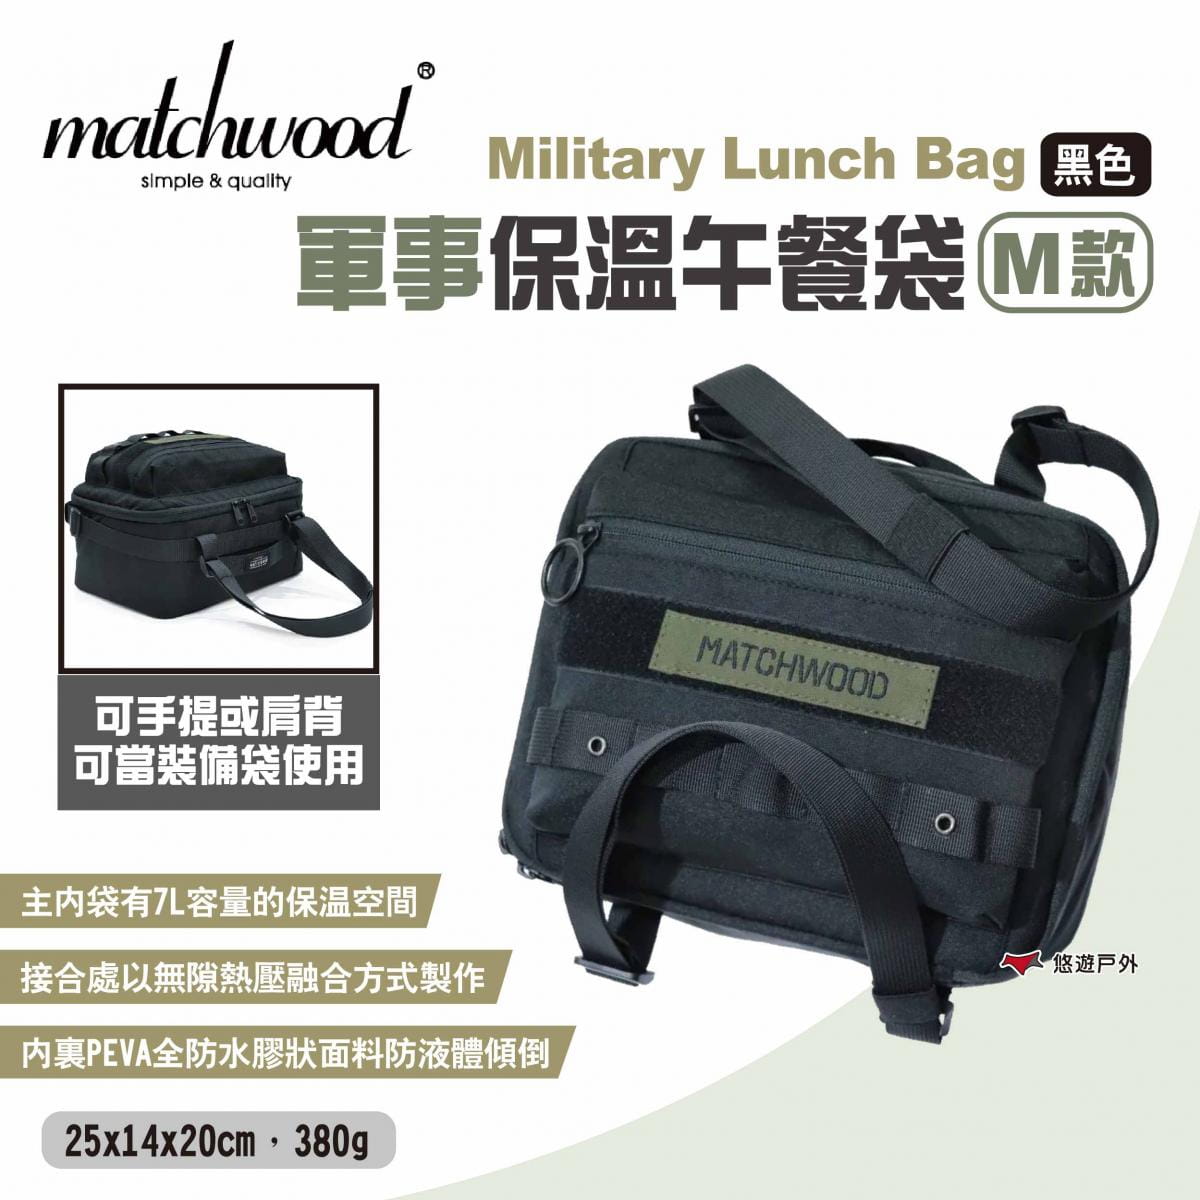 【Matchwood】Military Lunch Bag軍事保溫午餐袋-M款 悠遊戶外 1